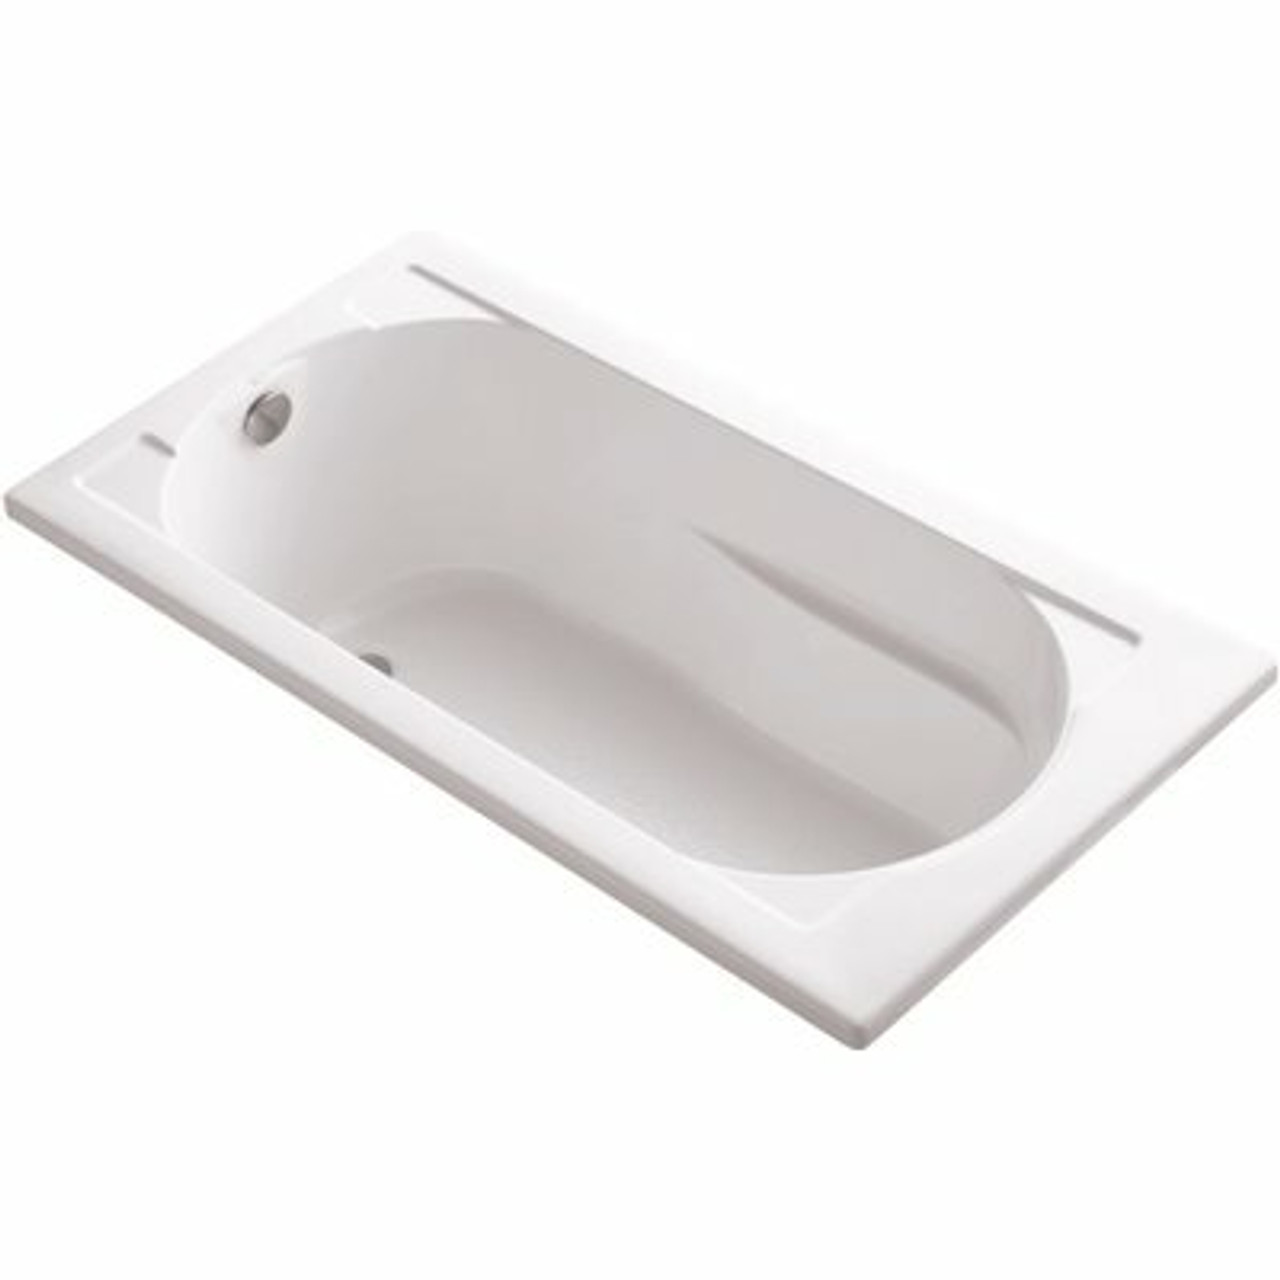 Kohler Devonshire 60 In. X 32 In. Acrylic Drop-In Bathtub With Reversible Drain In White